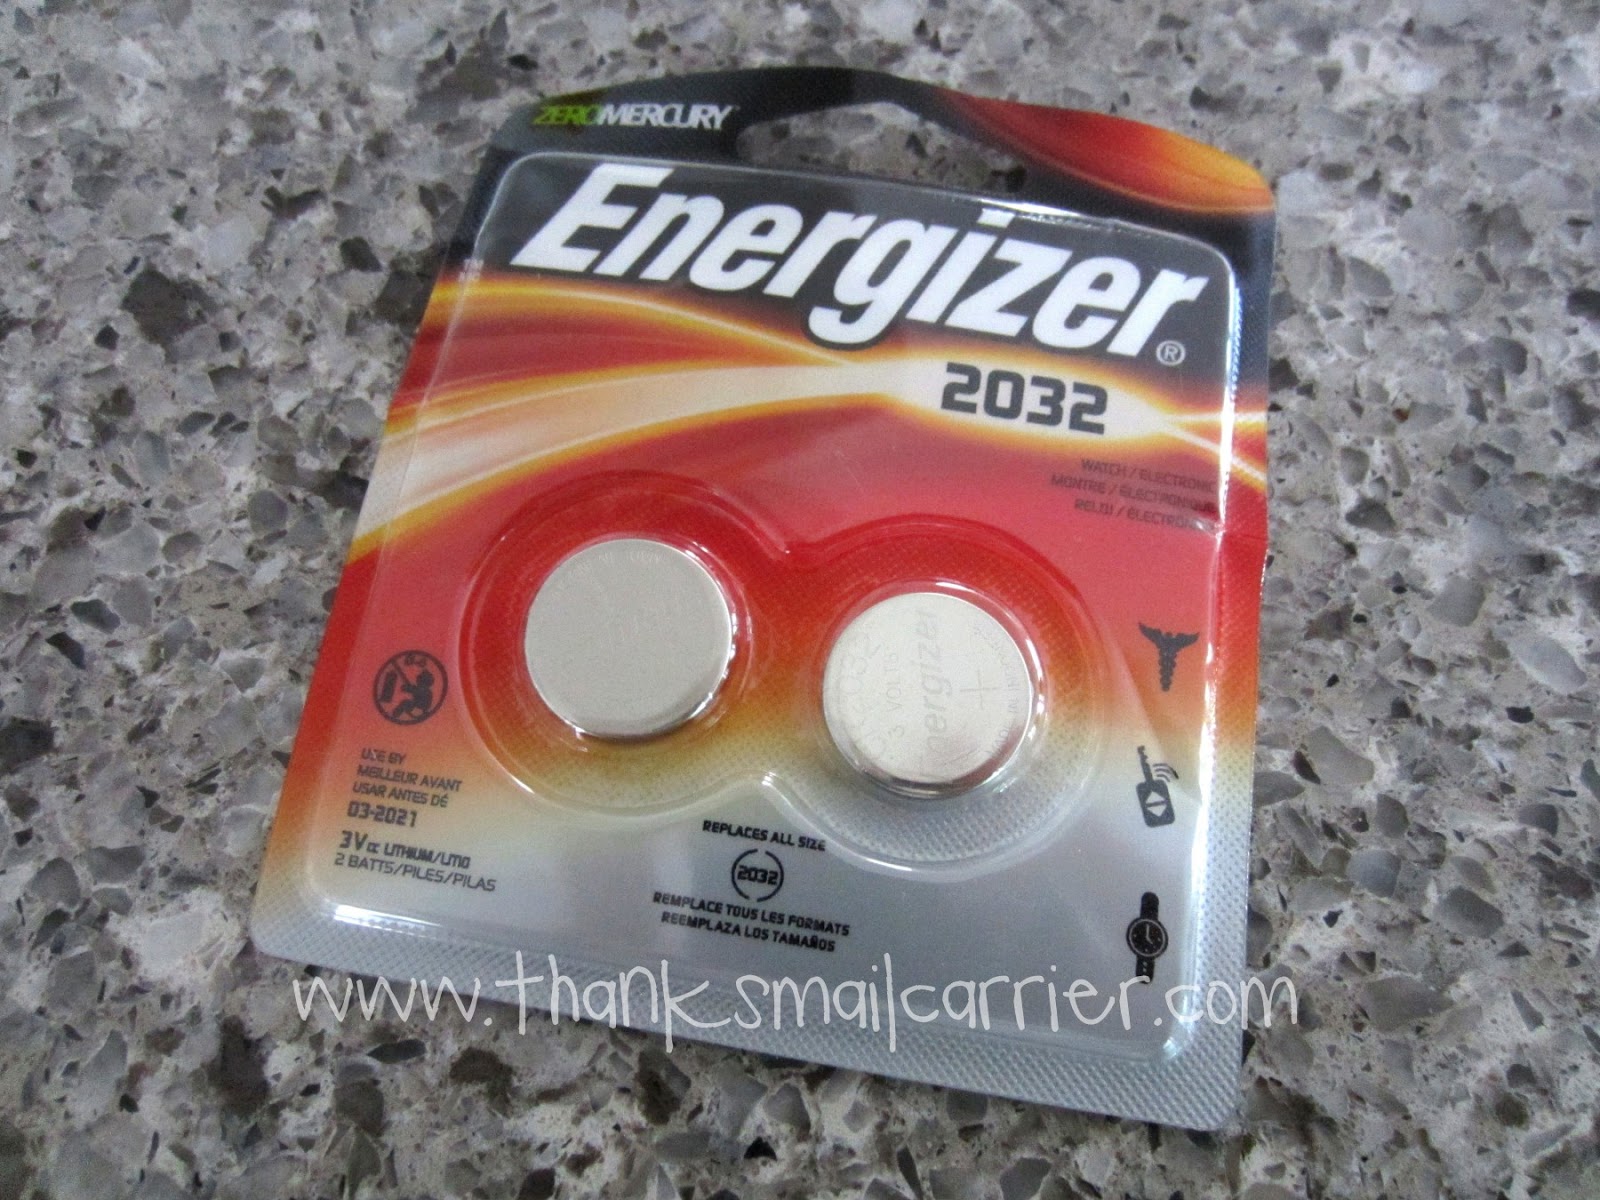 Energizer coin lithium batteries